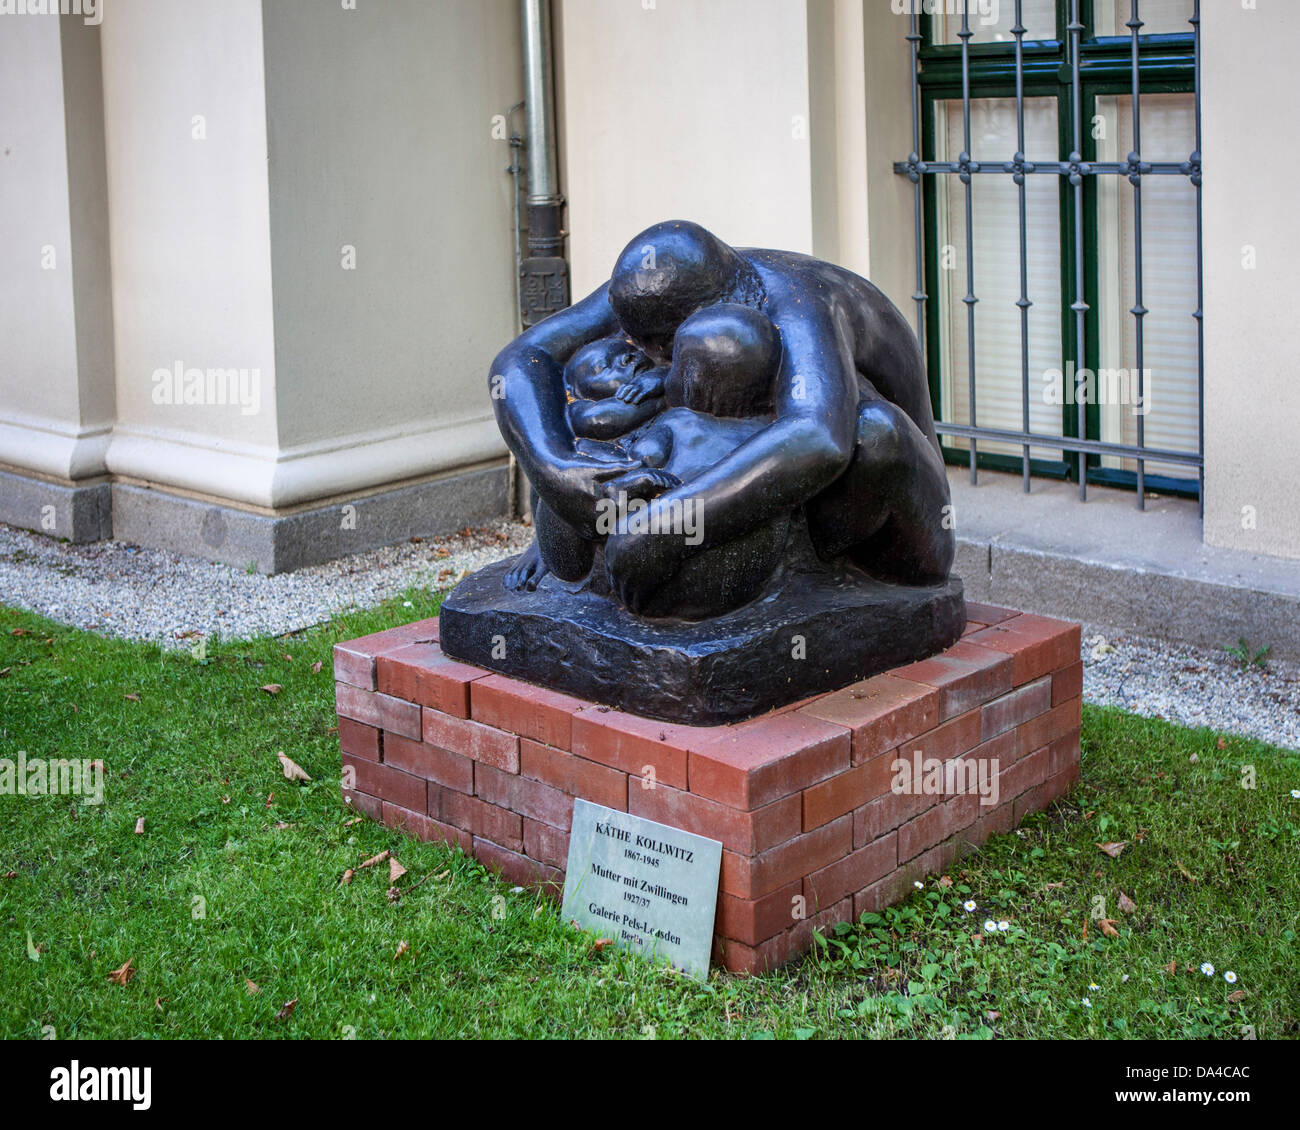 'Mutter mit Zwillingen' - 'Mother with twins' - a sculpture by Kåthe Kollwitz outside the museum in Fasanenstrasse, Berlin Stock Photo